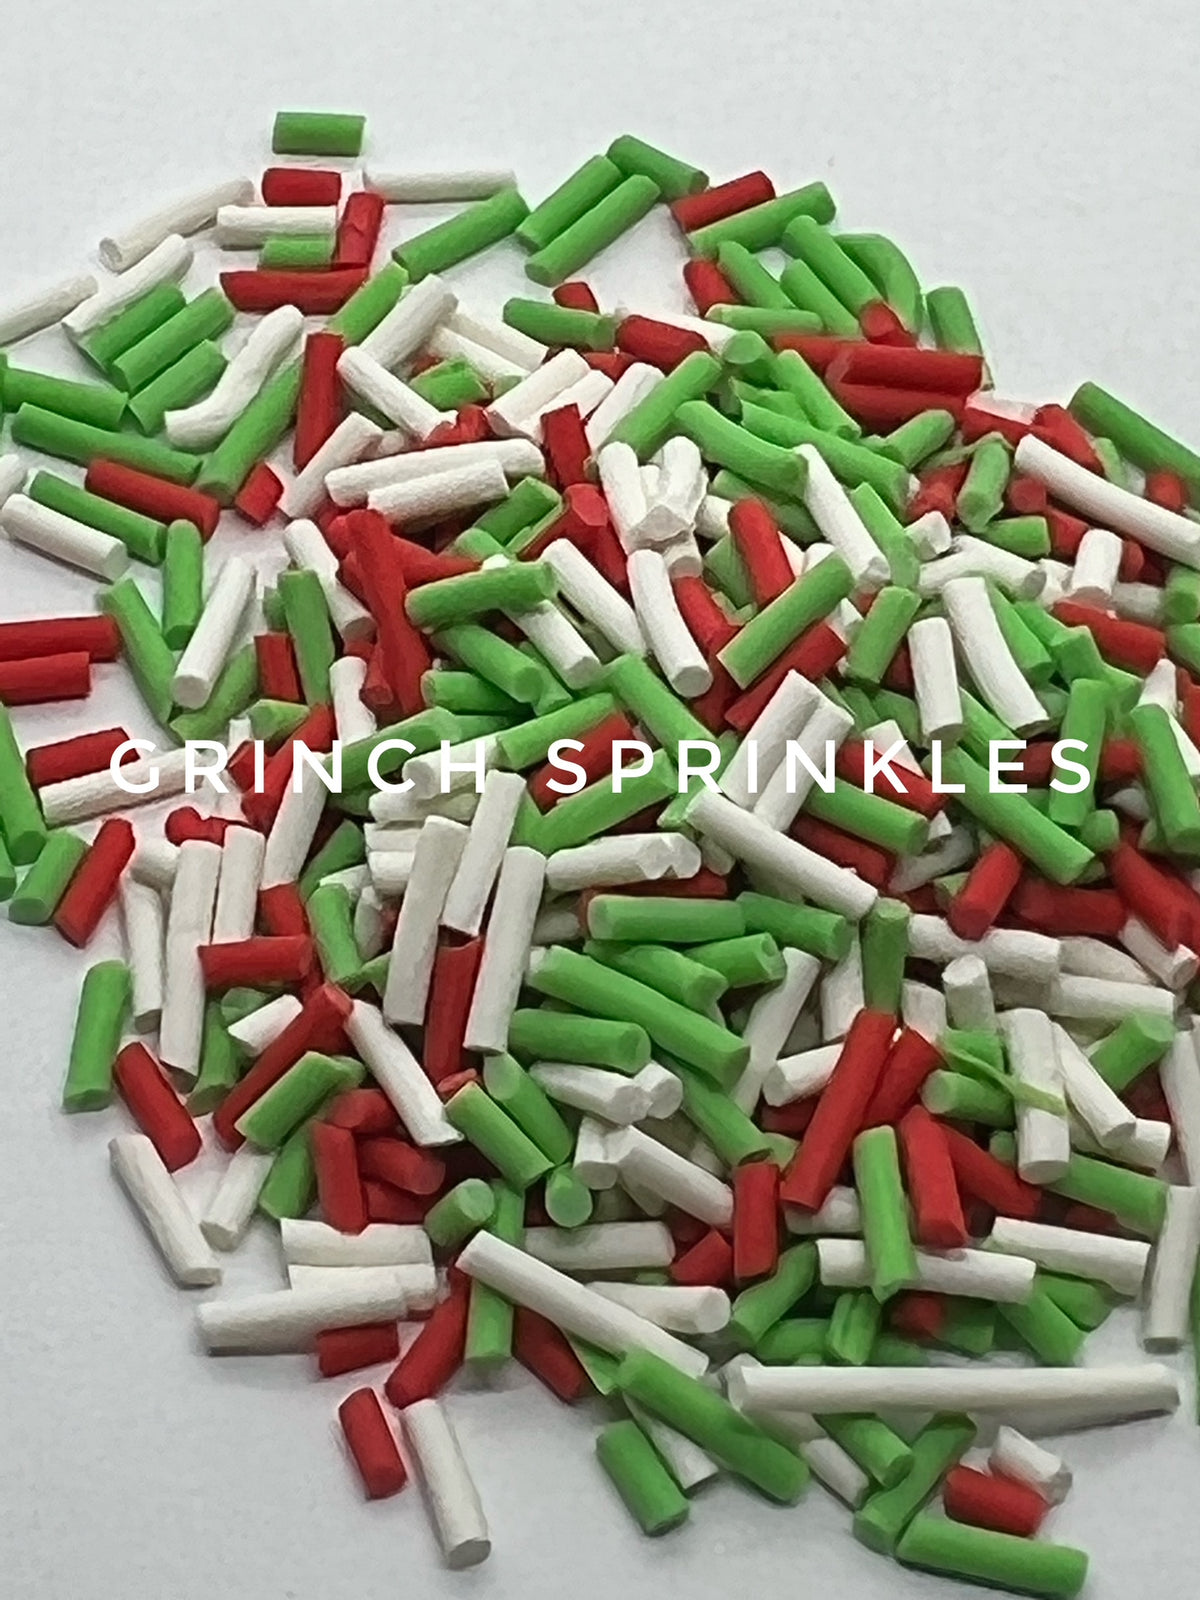 Grinch Sprinkles